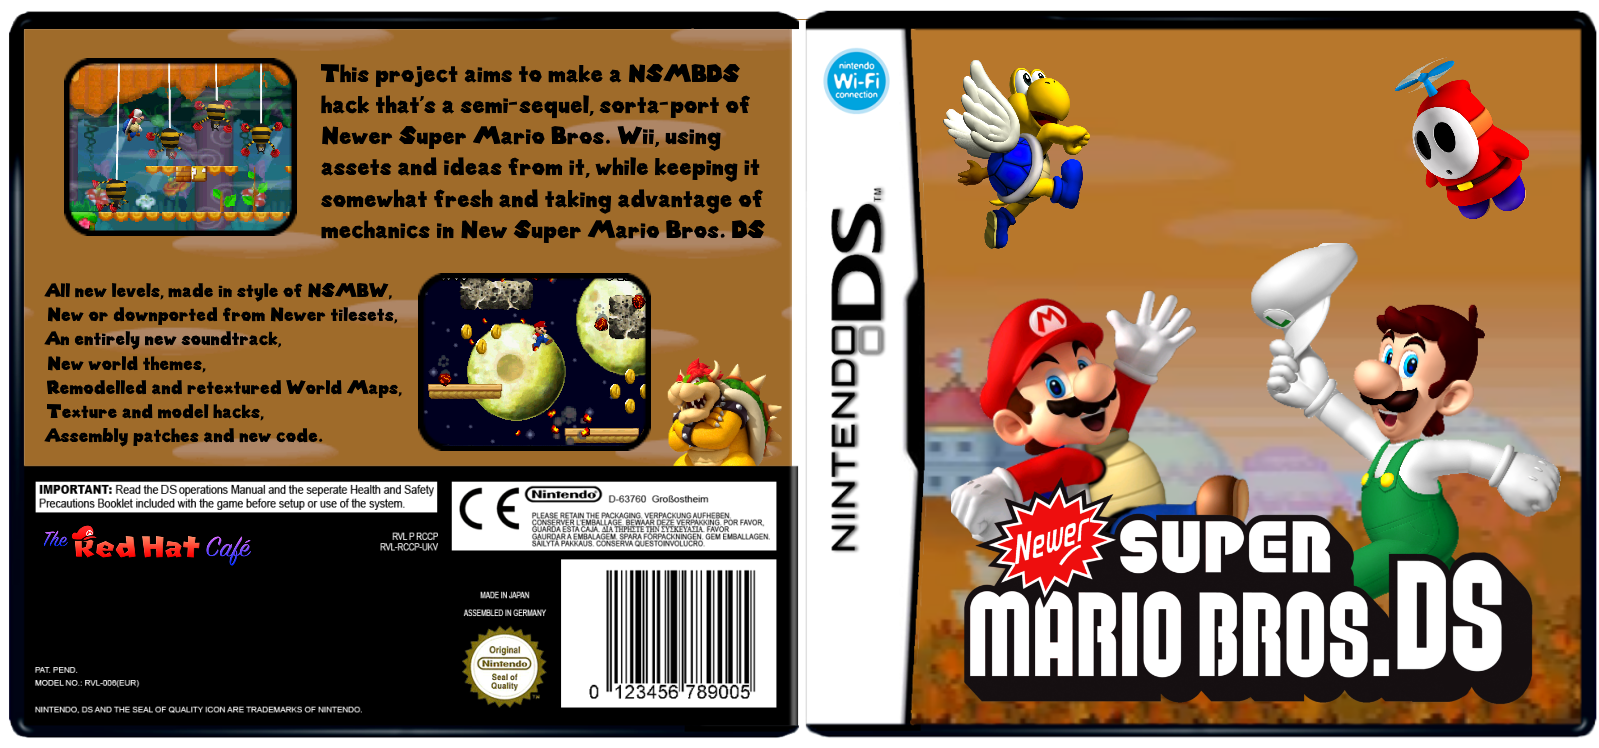 Newer Super Mario Bros. DS box cover